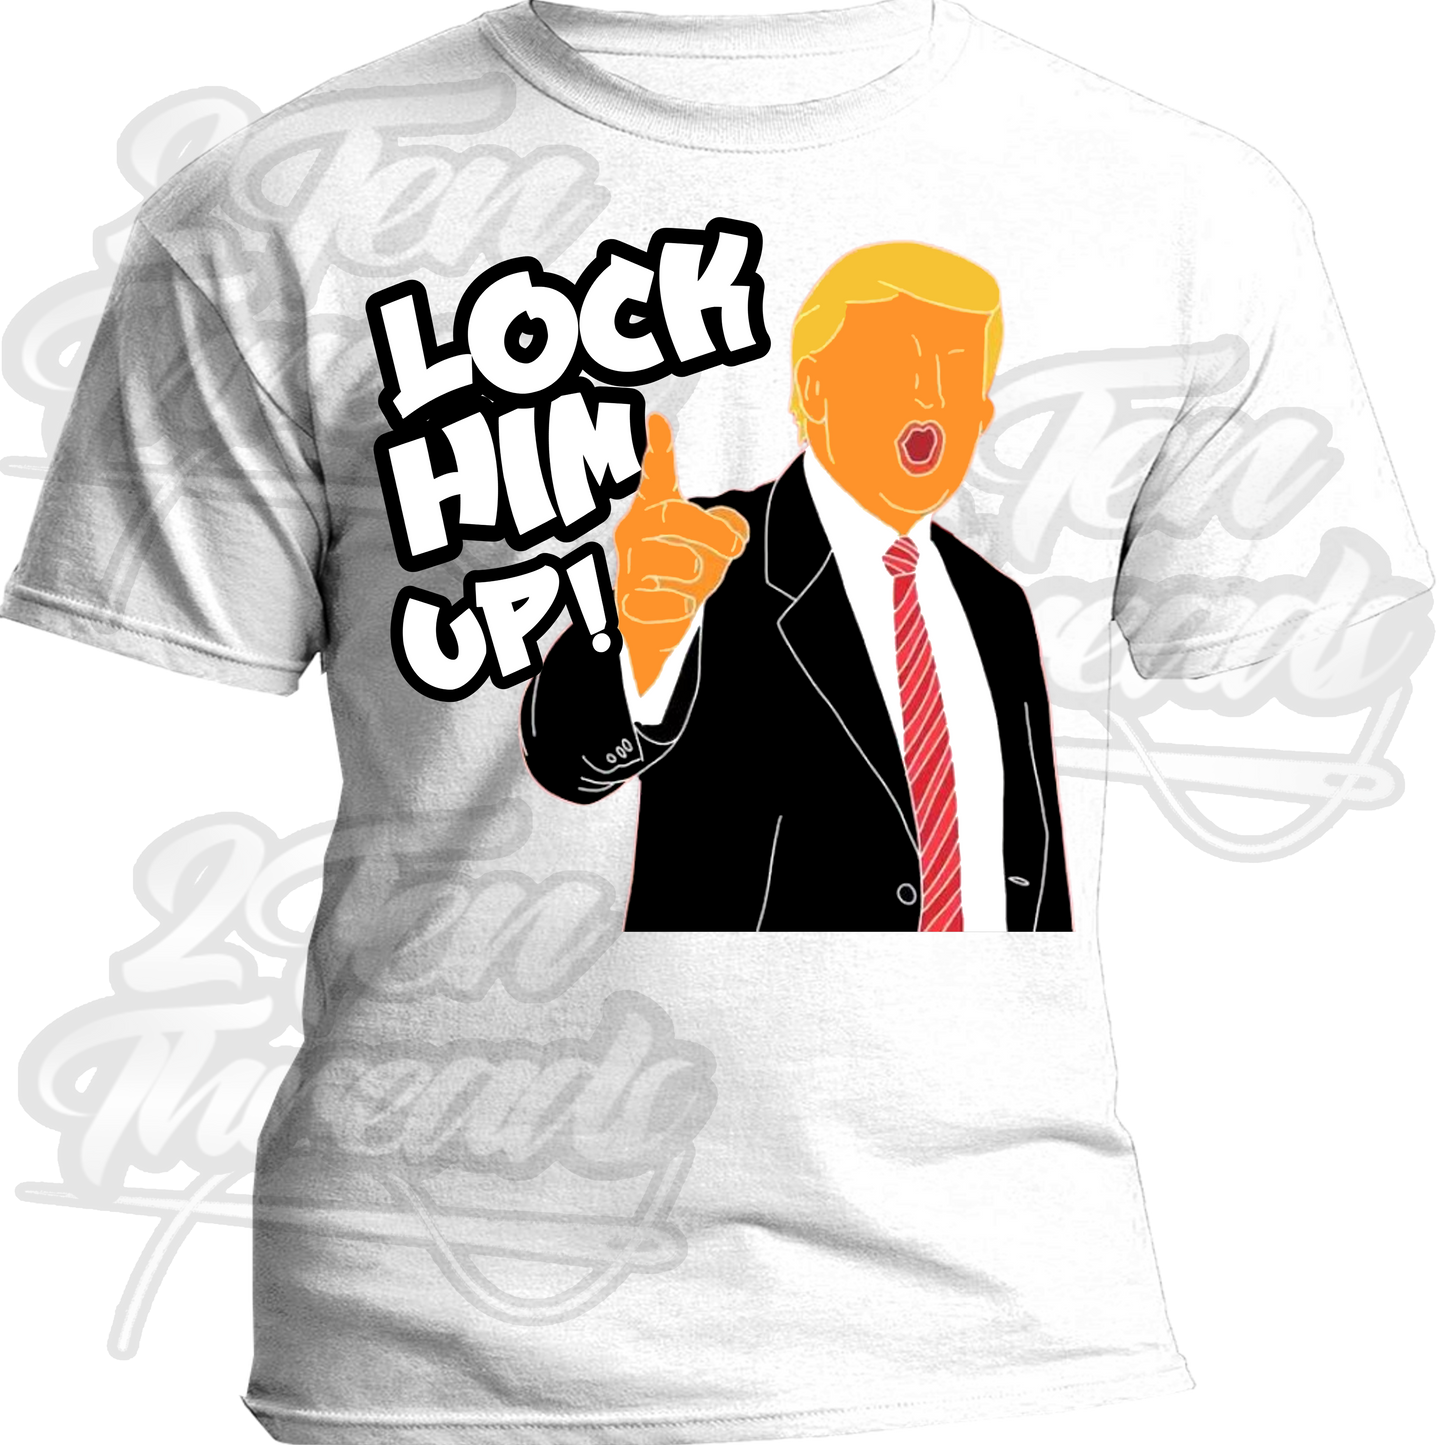 Lock him up! Trump Shirt